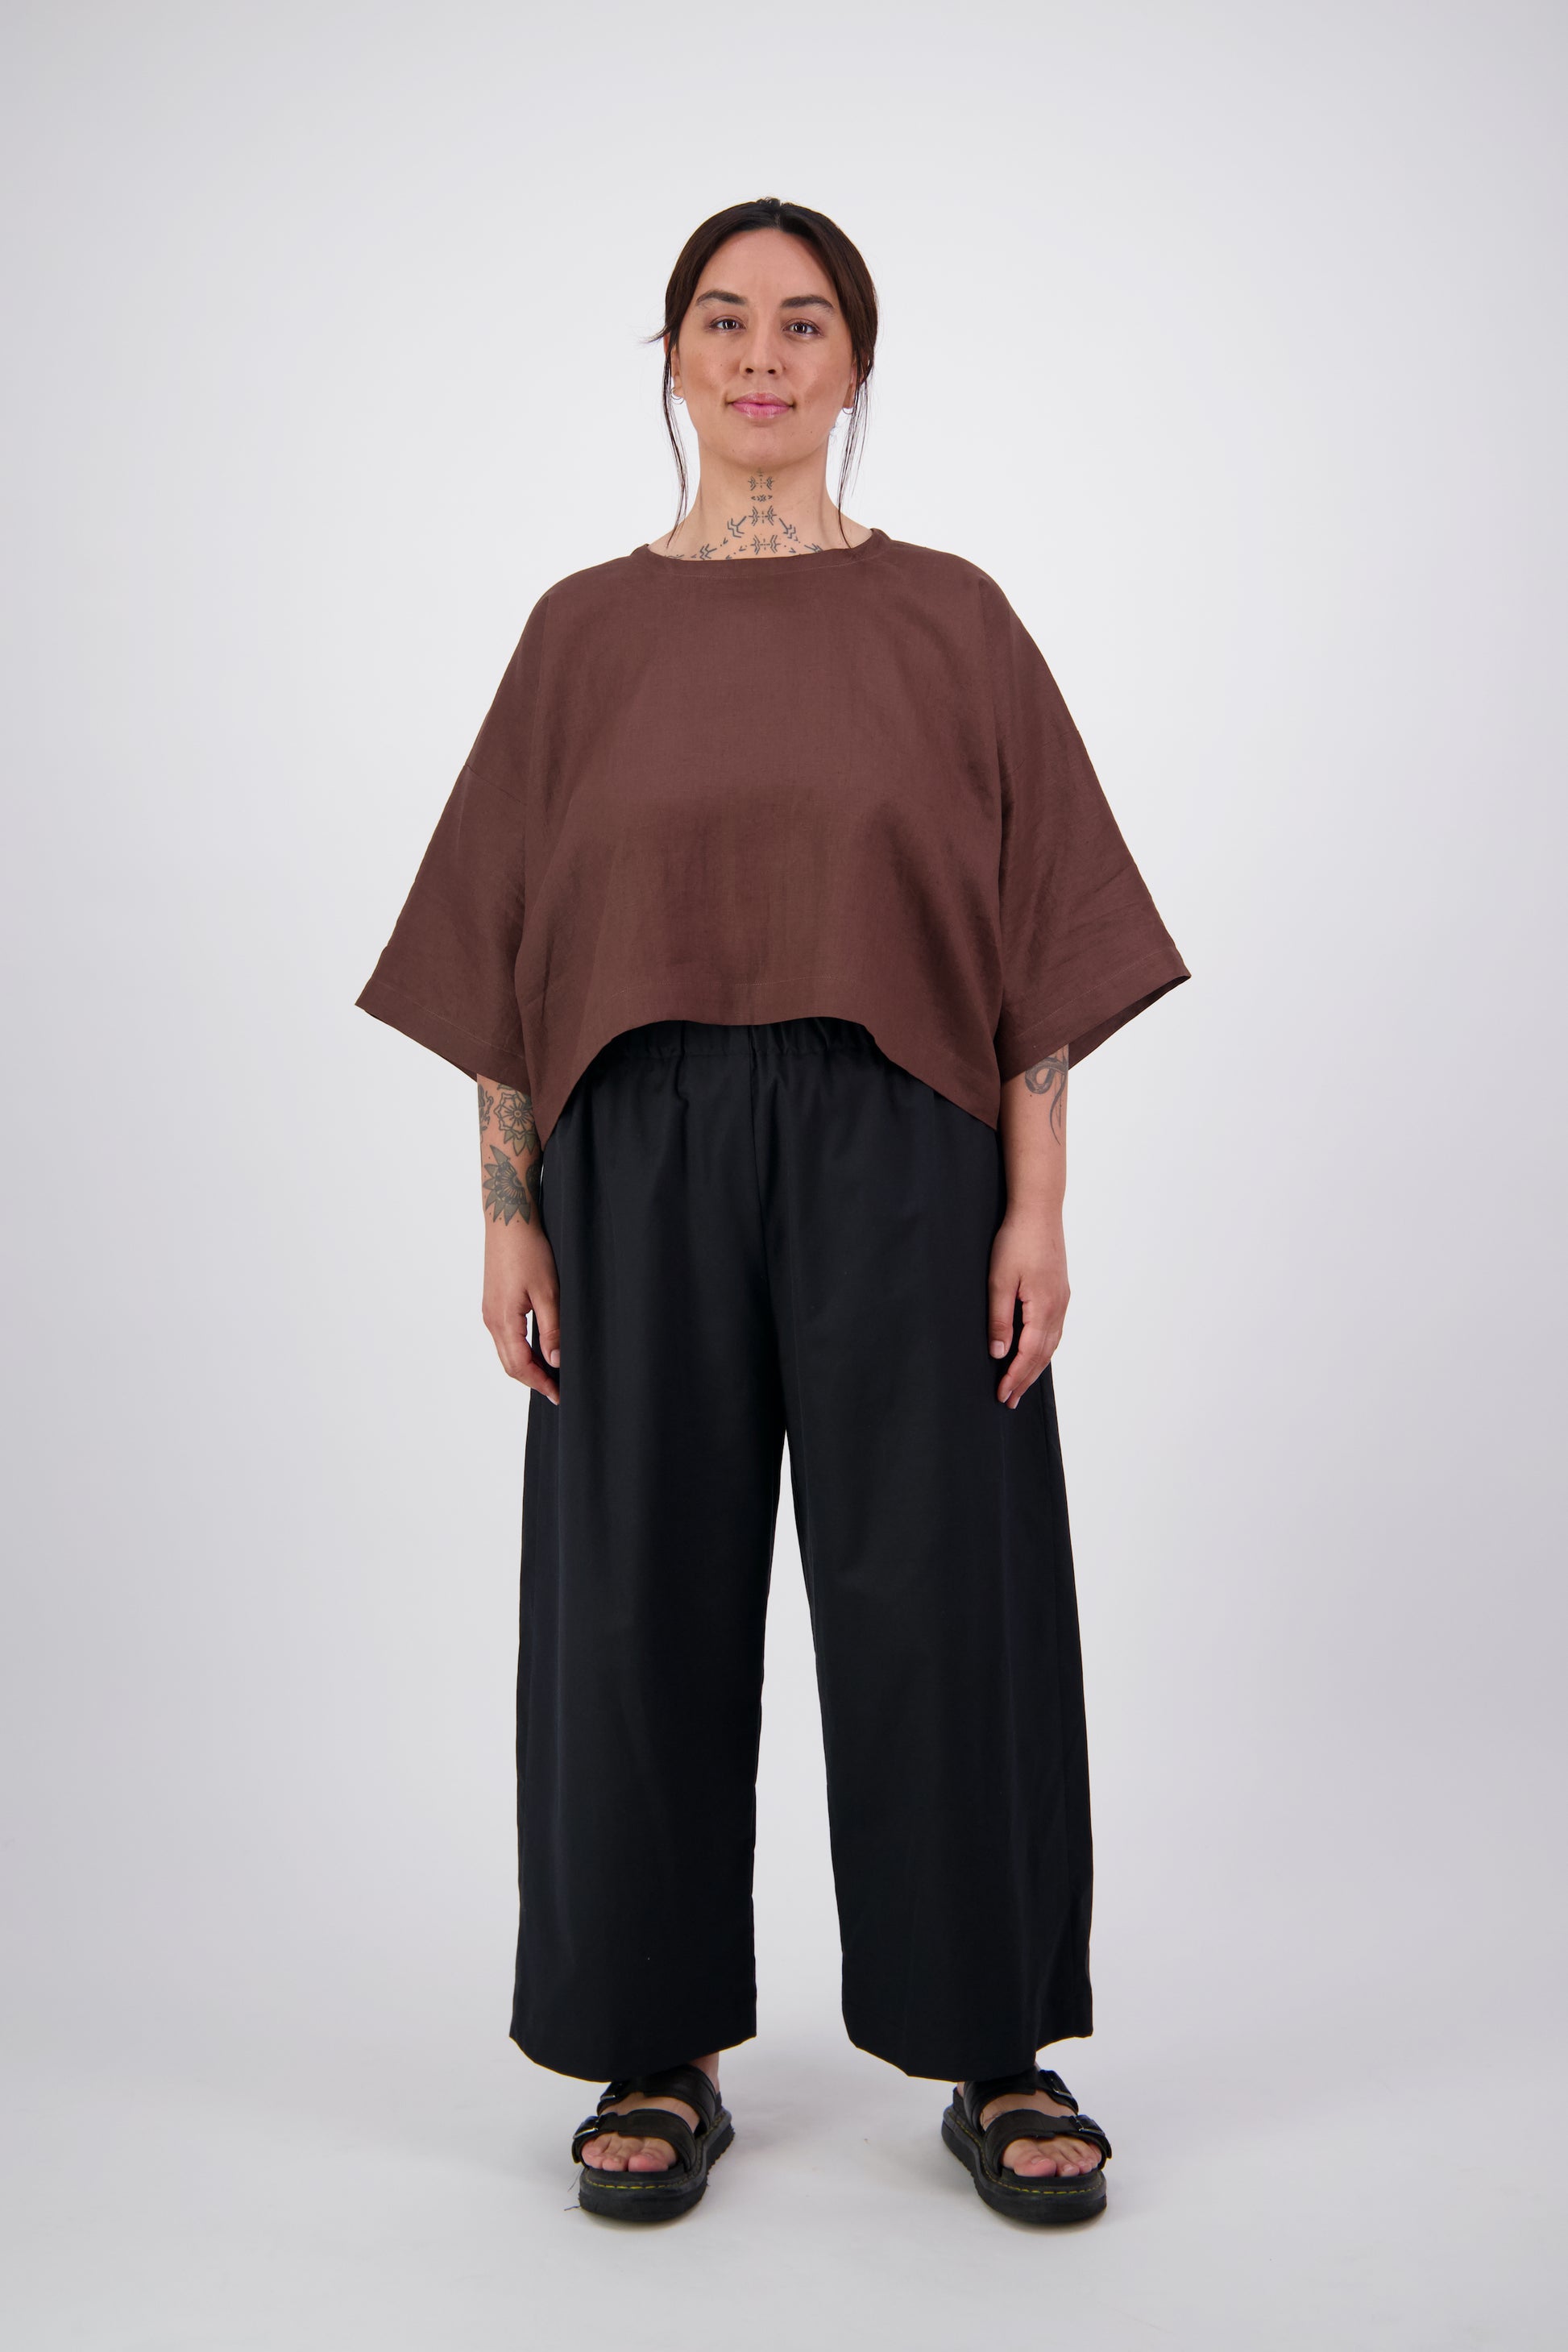 Arlena wearing black twill pants with a brown linen crop tee top